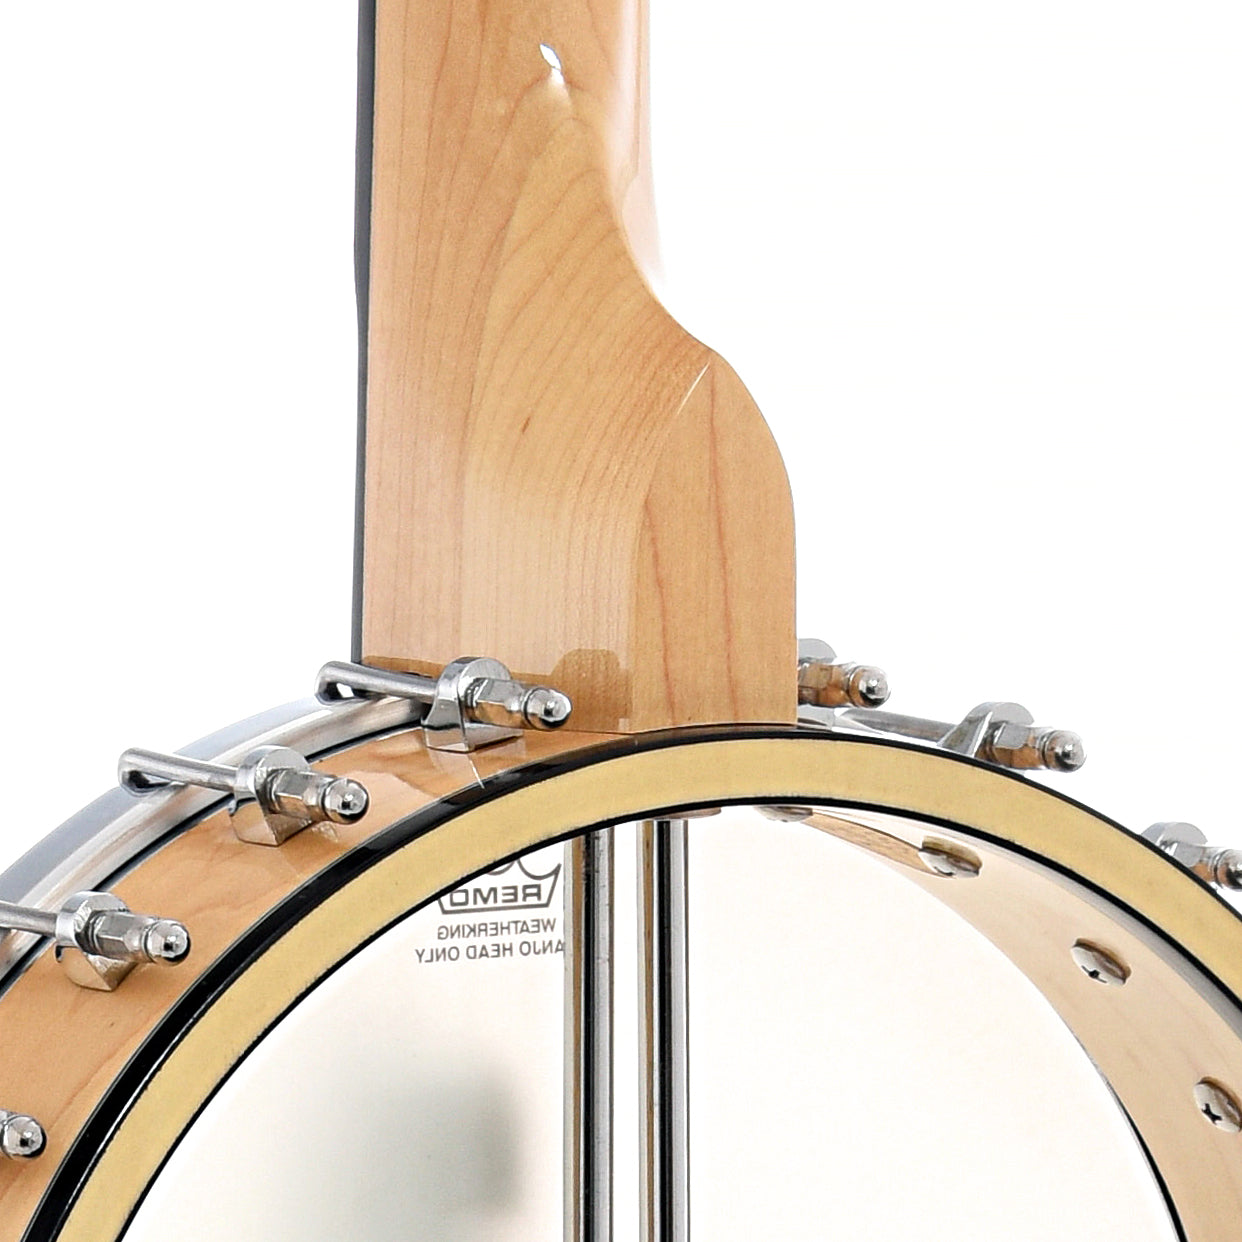 Neck joint of Gold Tone Maple Mountain MM-150LN Longneck Banjo